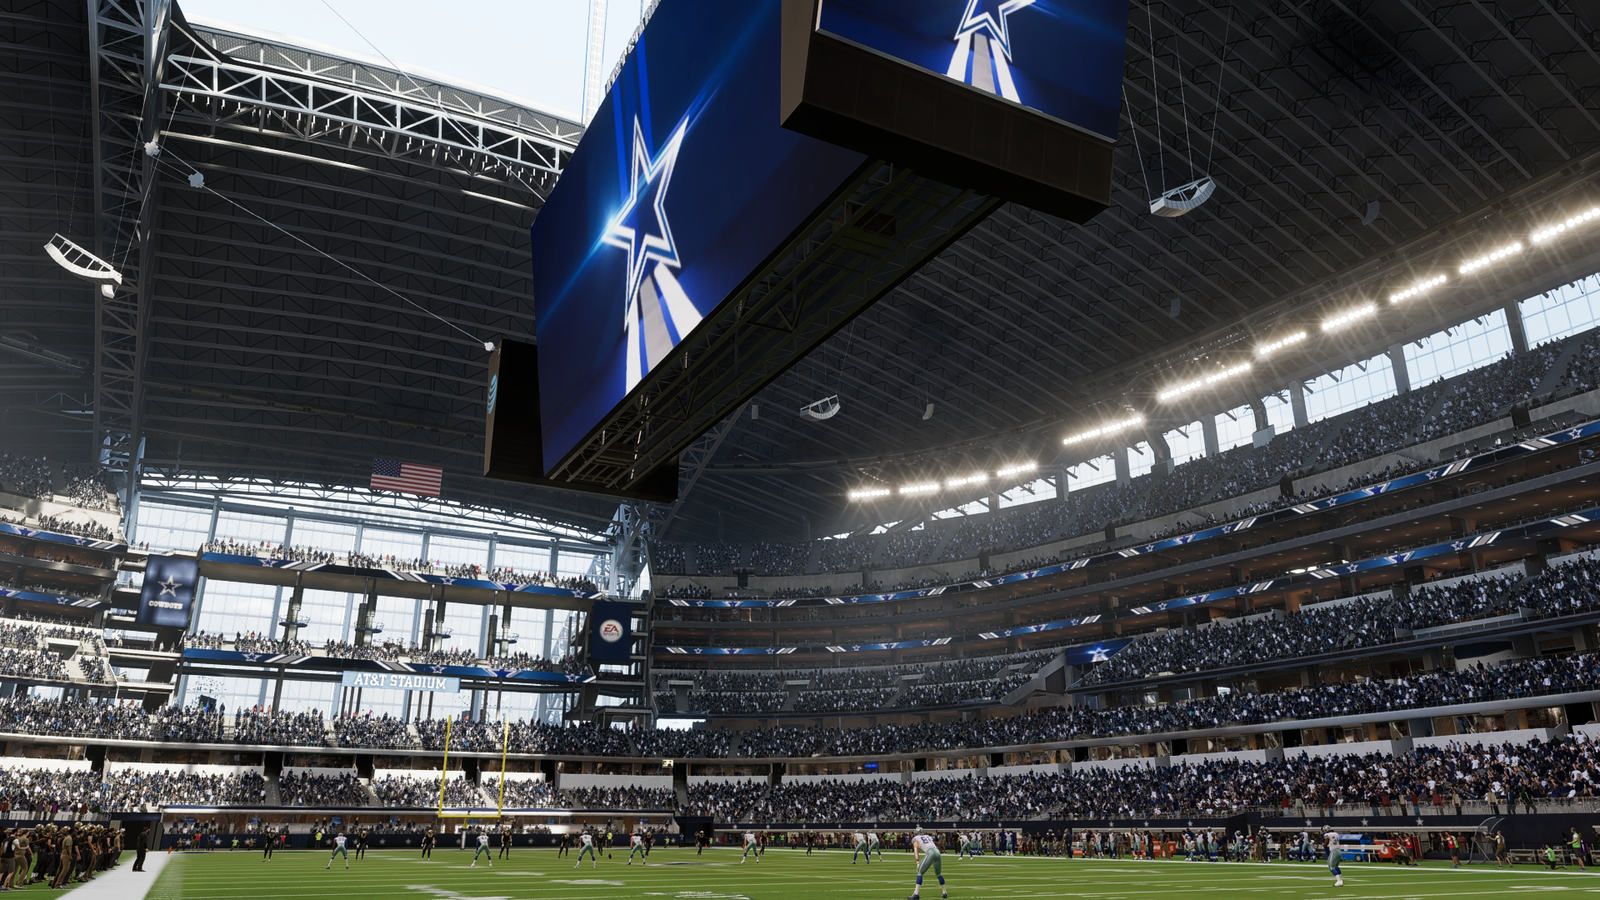 Madden 22 home field advantages advantage dynamic gameday cowboys jumbo tron jumbotron